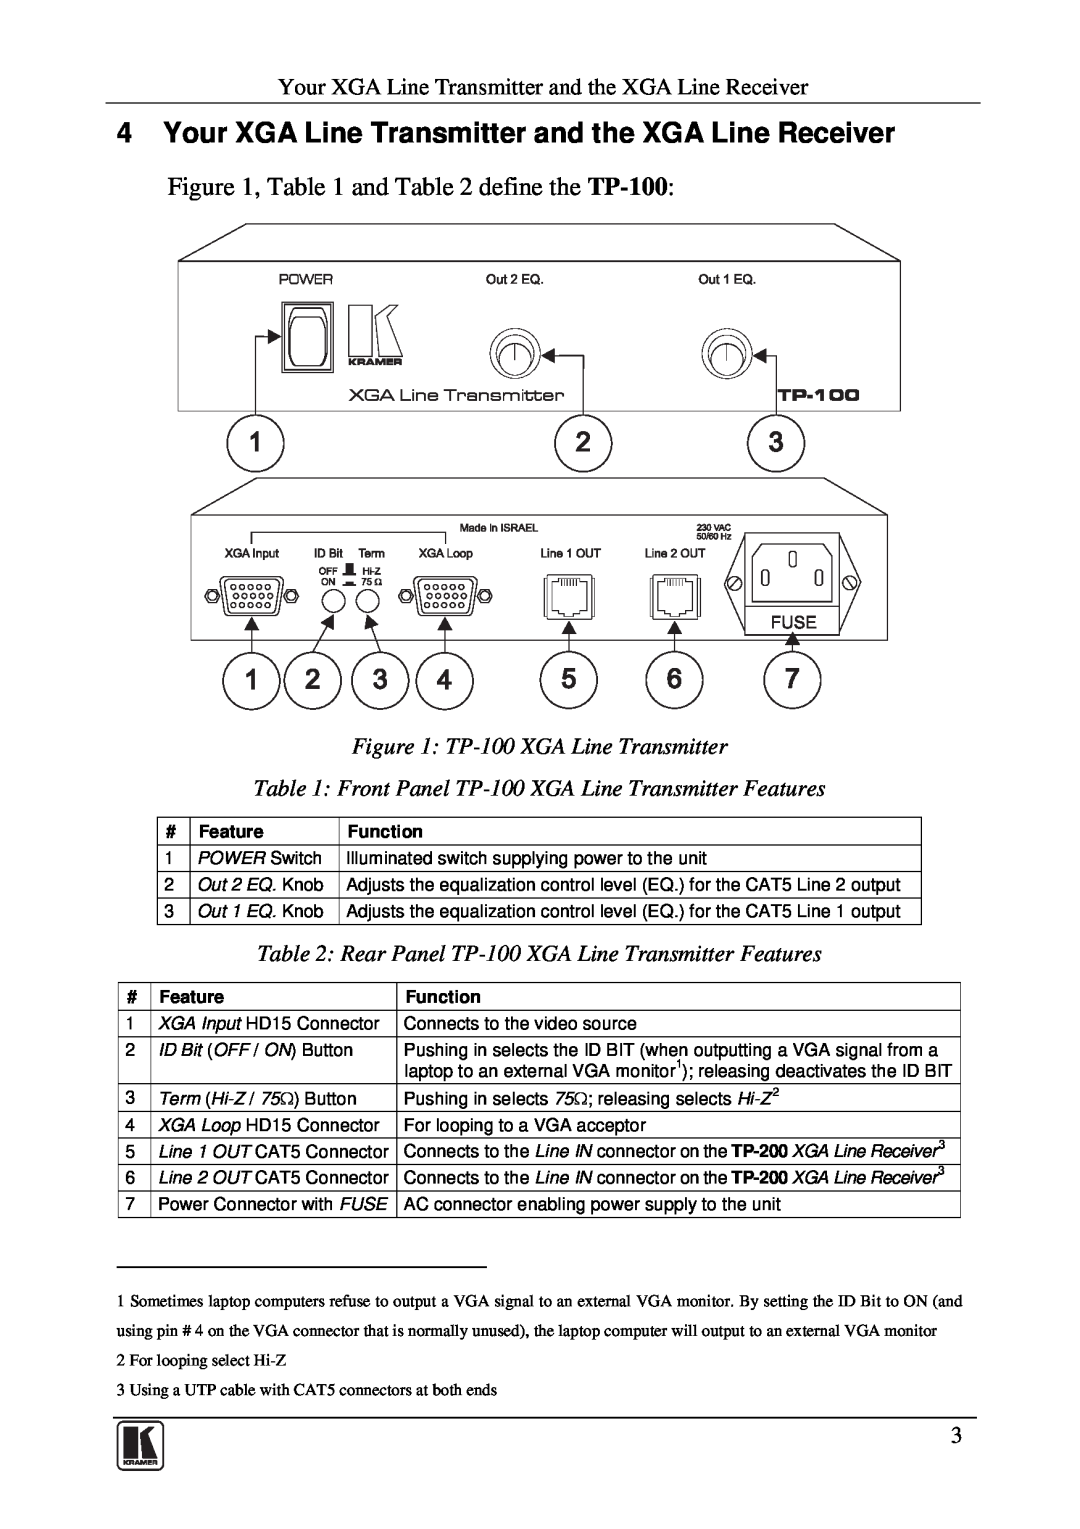 Kramer Electronics user manual and define the TP-100 